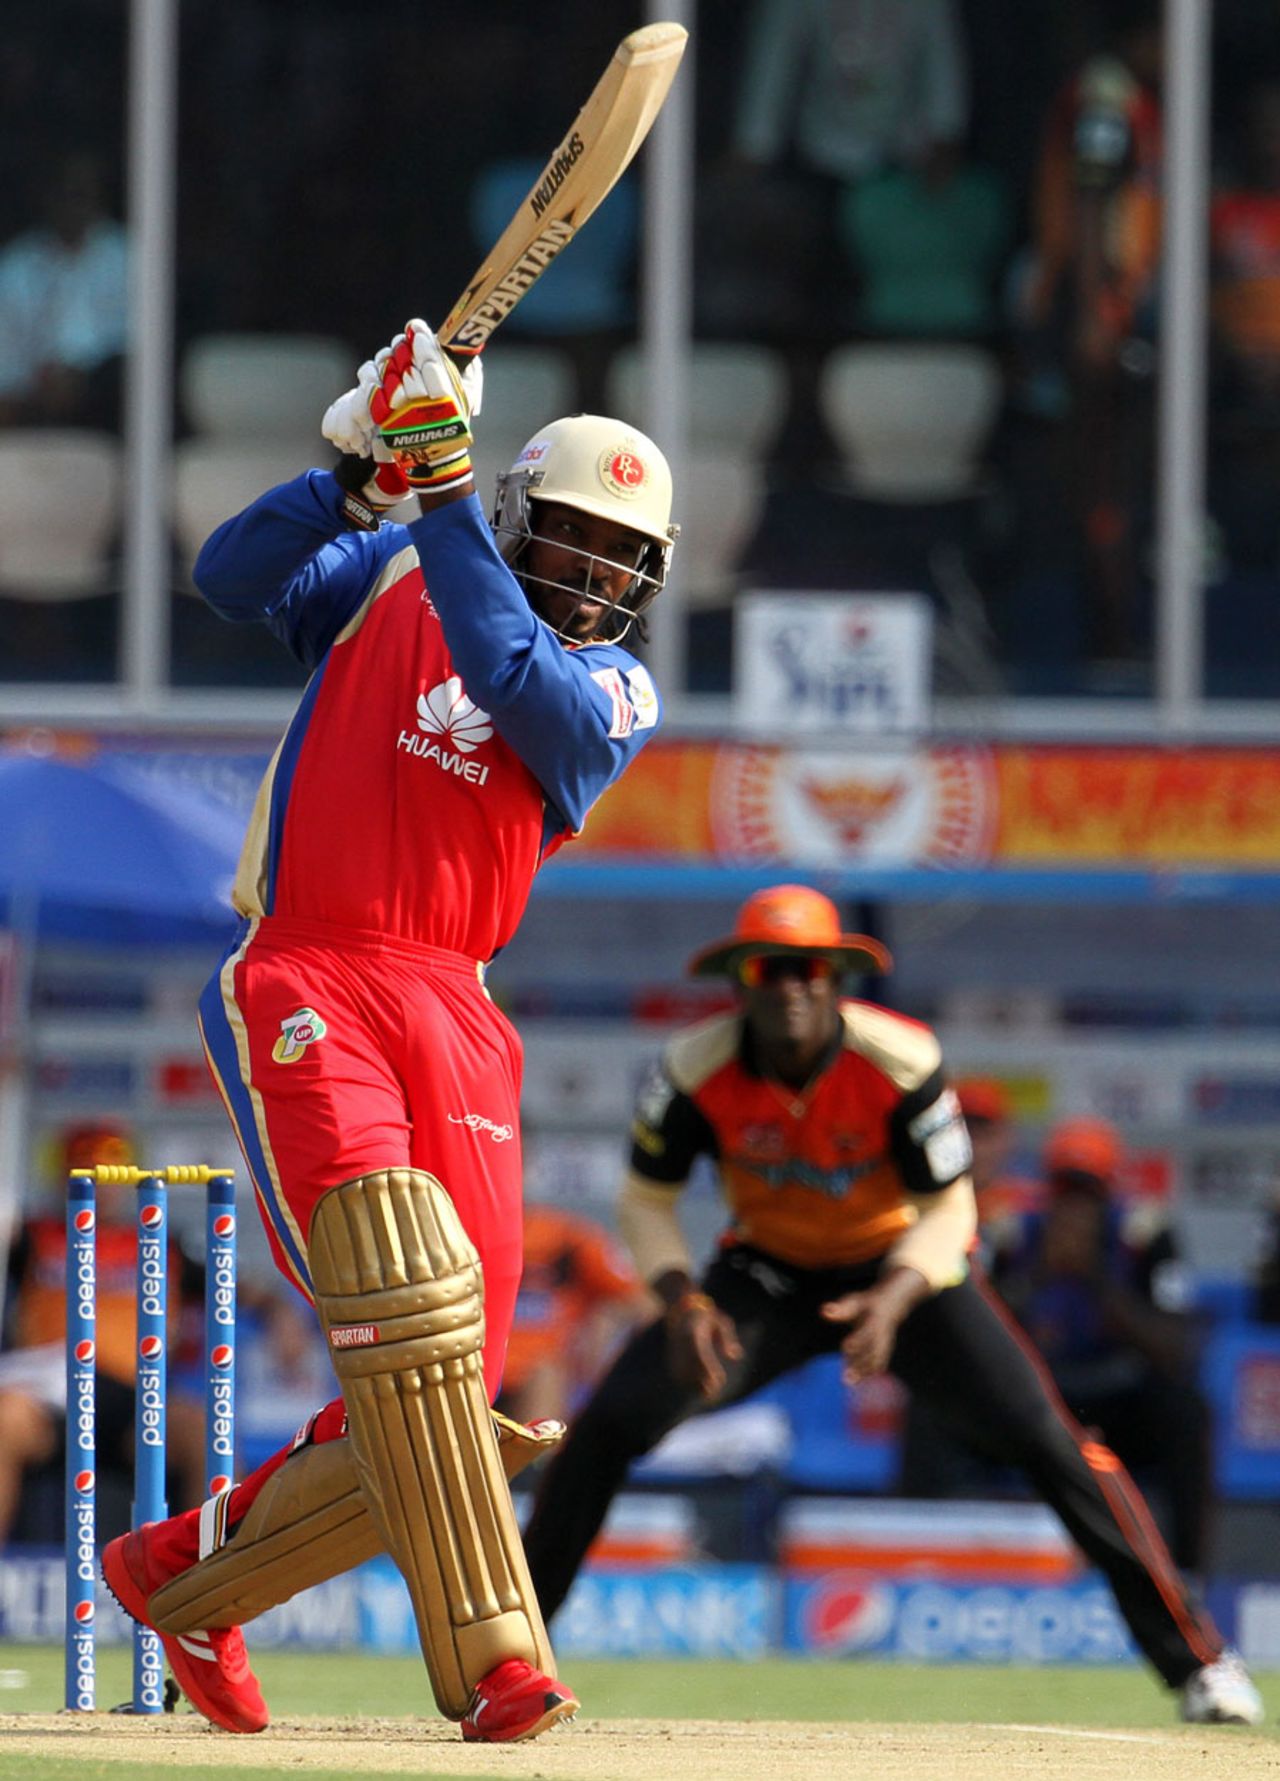 Chris Gayle struggled in his 20-ball 14, Sunrisers Hyderabad v Royal Challengers Bangalore, IPL 2014, Hyderabad, May 20, 2014